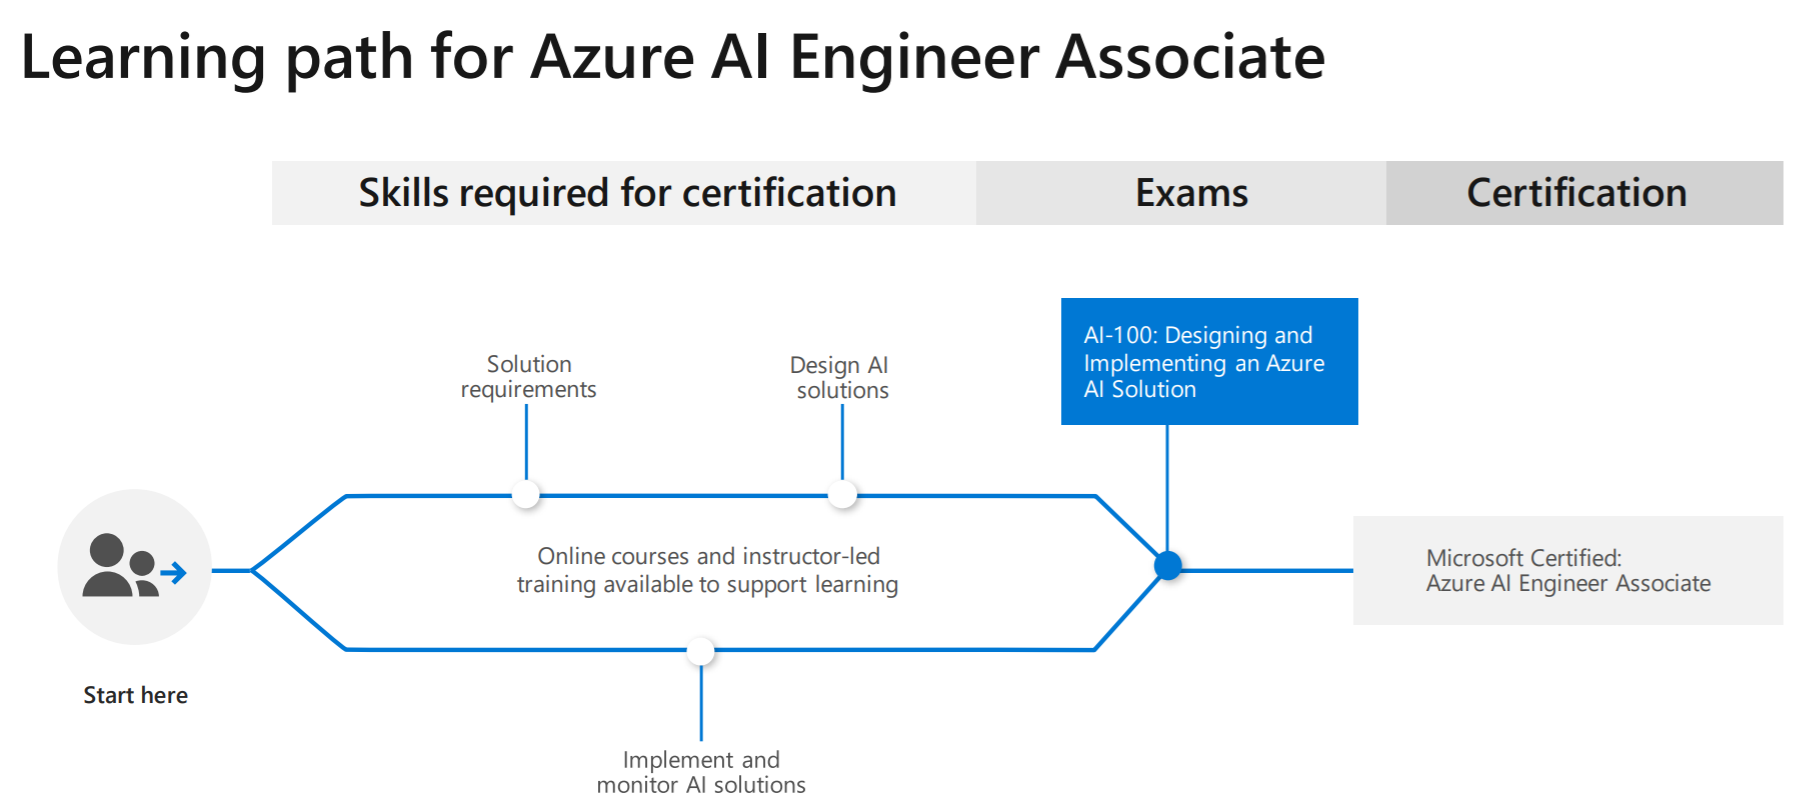 "Azure AI Engineer"